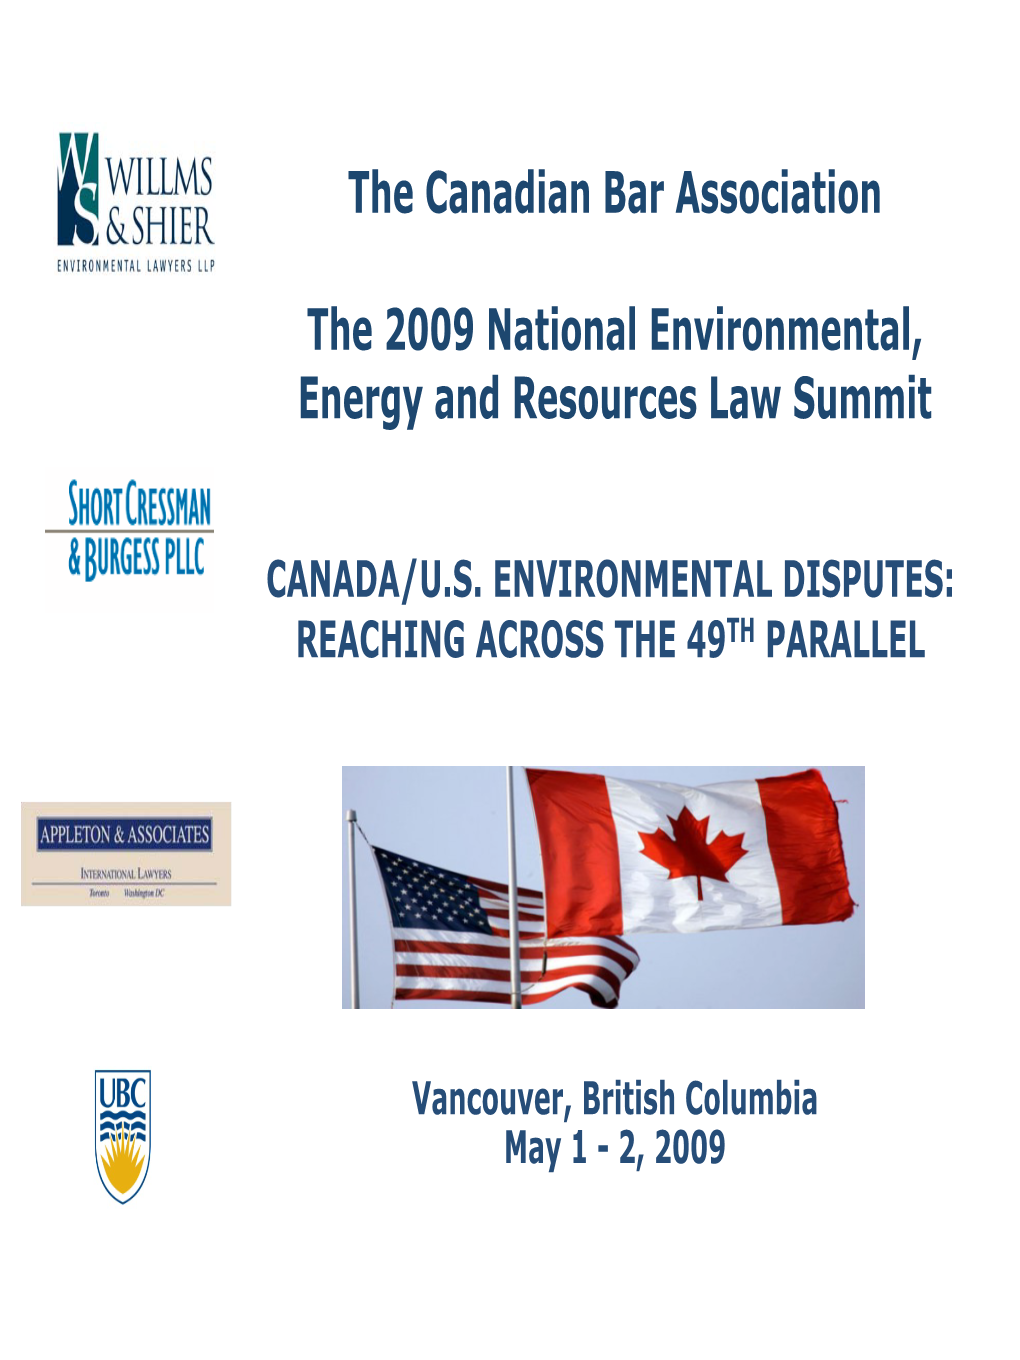 The Canadian Bar Association the 2009 National Environmental